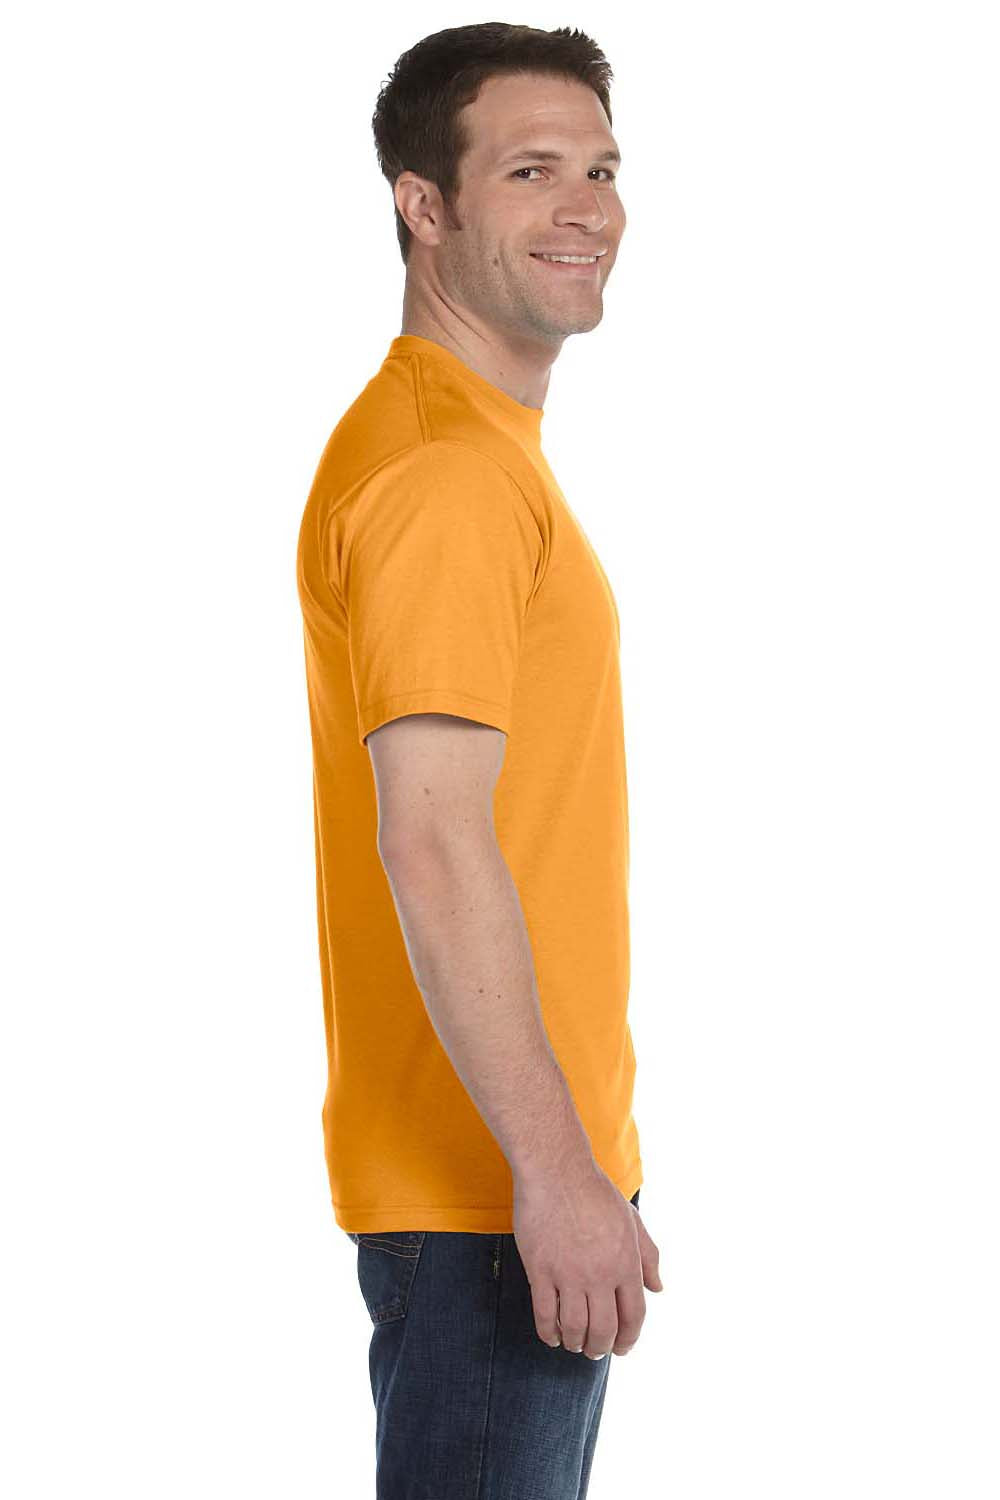 Hanes 5280 Mens ComfortSoft Short Sleeve Crewneck T-Shirt Gold Side